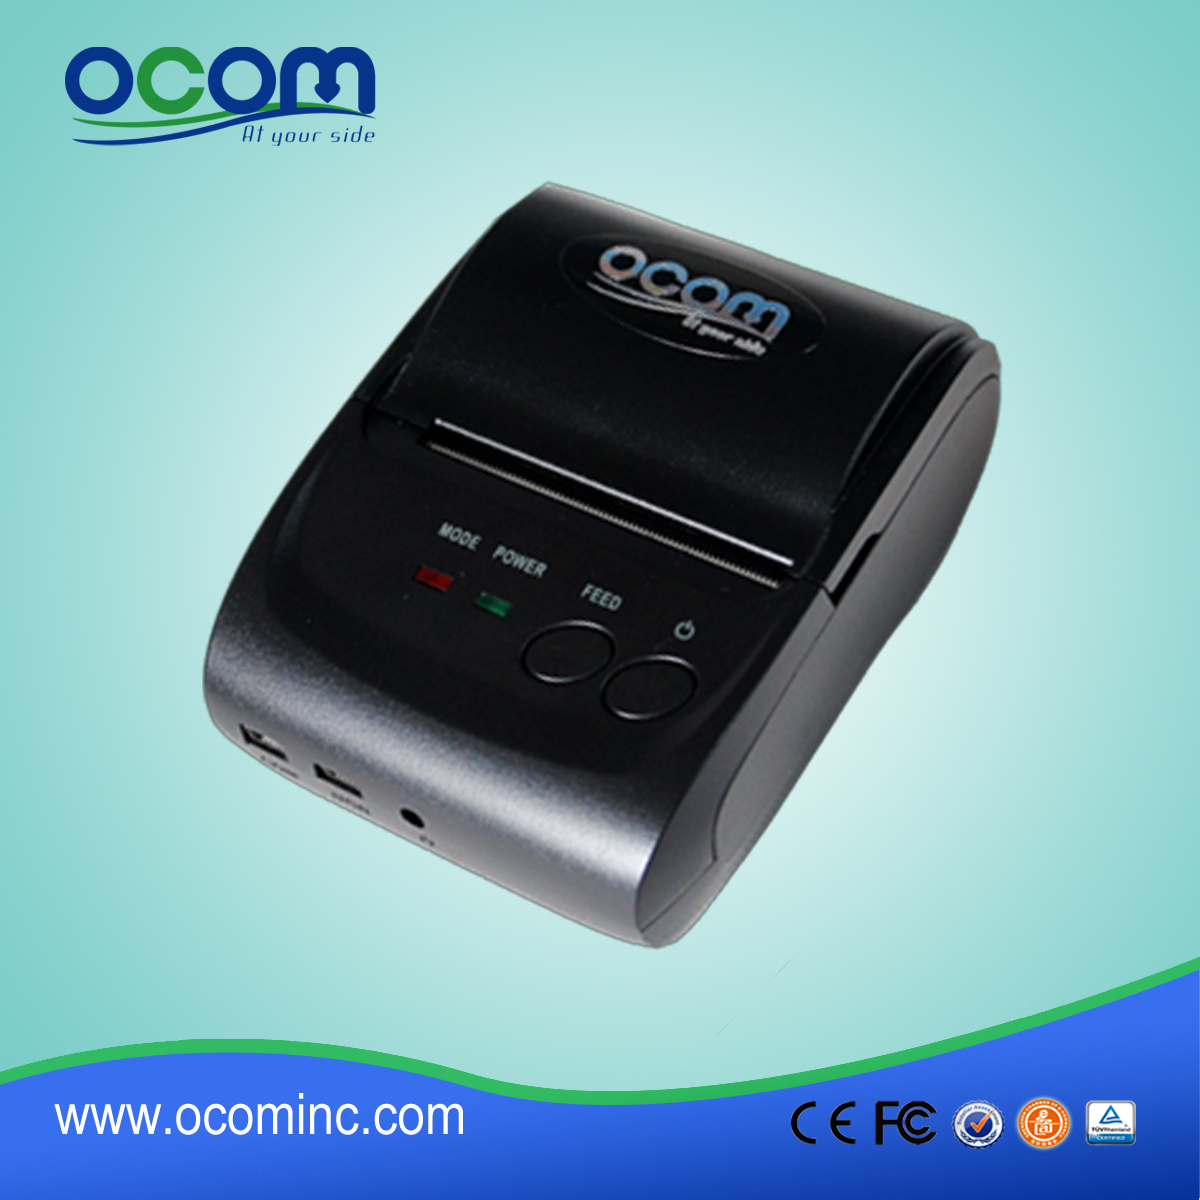 OCPP-M05: mini-impressora Bluetooth portátil, pos impressora térmica